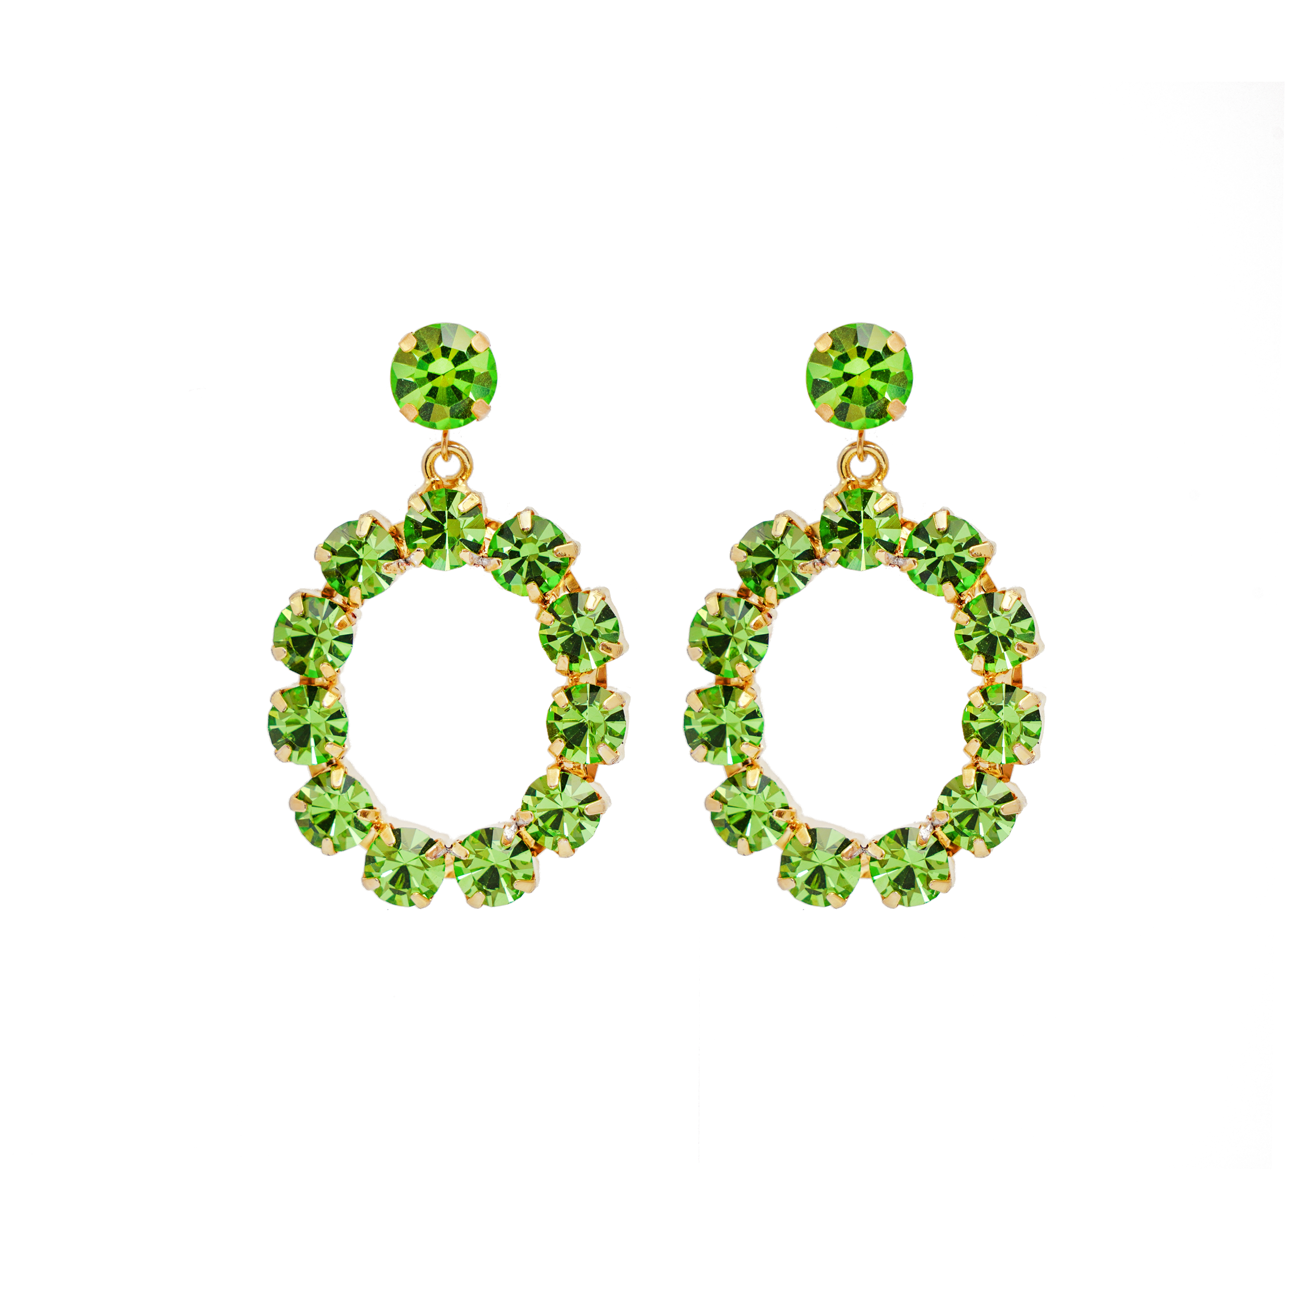 Camilla Swarovski earrings - So green